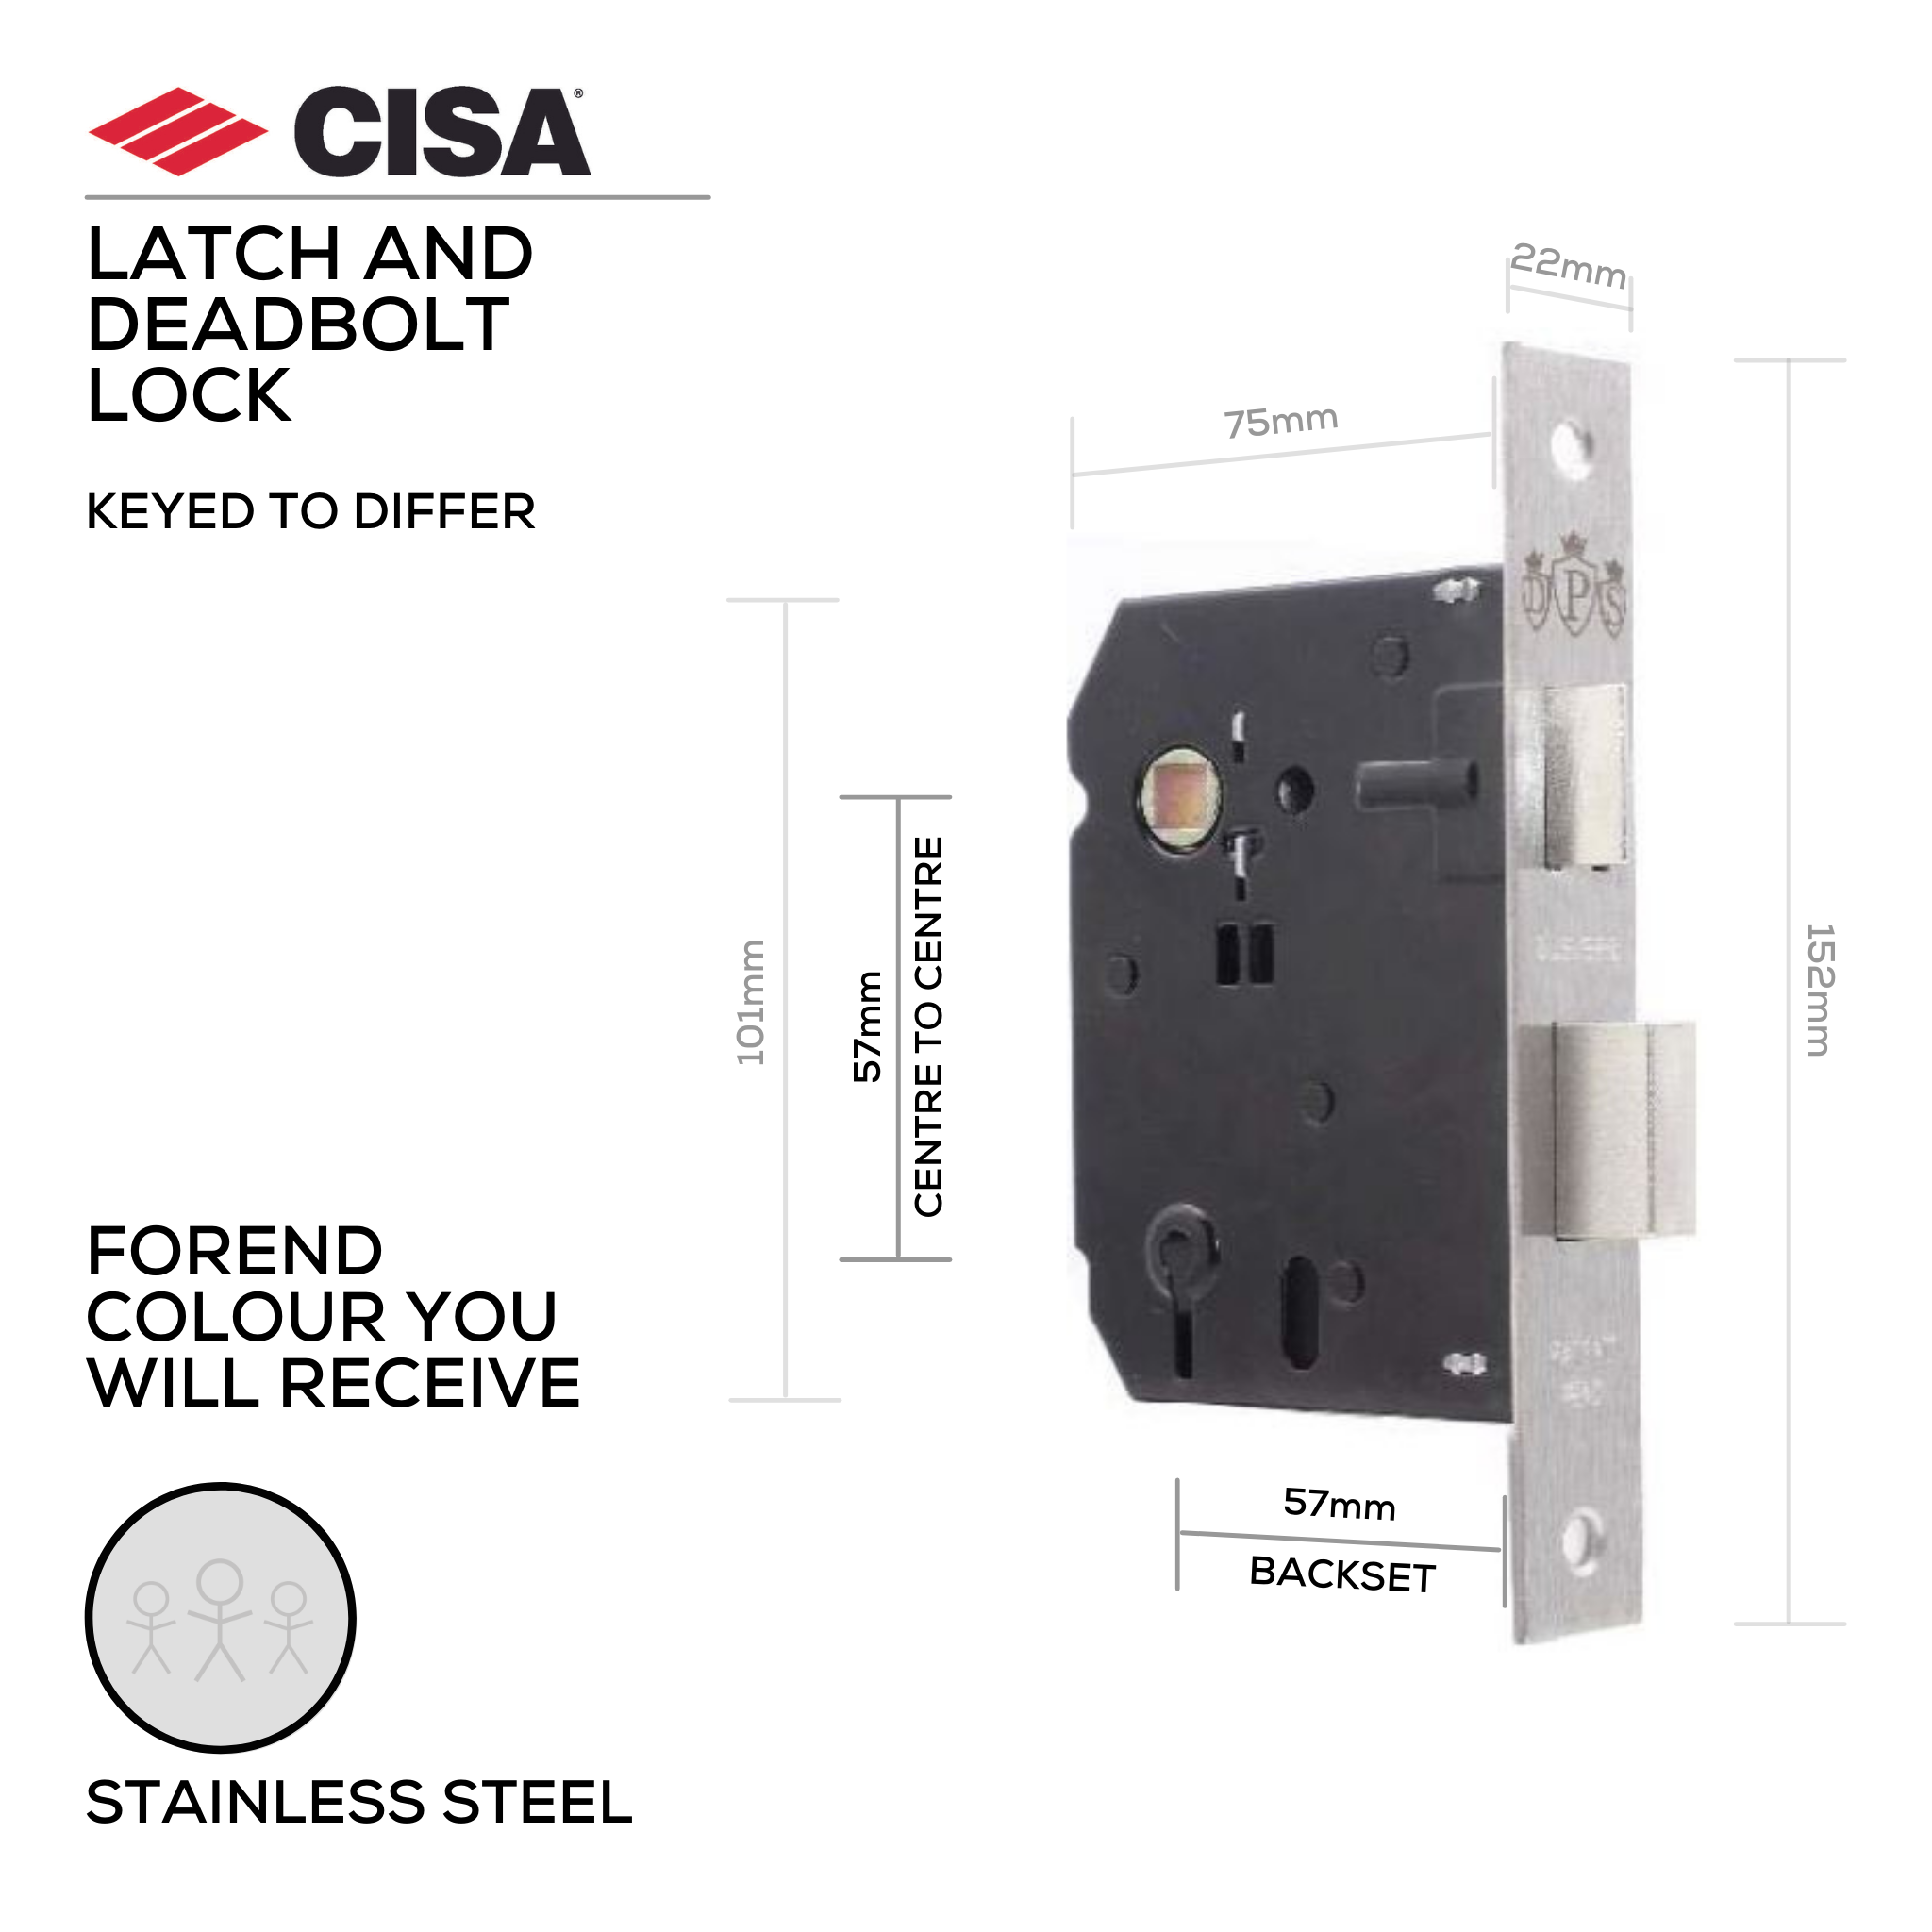 DPS3L-57-SS, Latch & Deadbolt Lock, Lever (Key), 3 Lever Lock, Keyed to Differ, 3 Keys, 57mm (Backset), 57mm (ctc), Stainless Steel, CISA